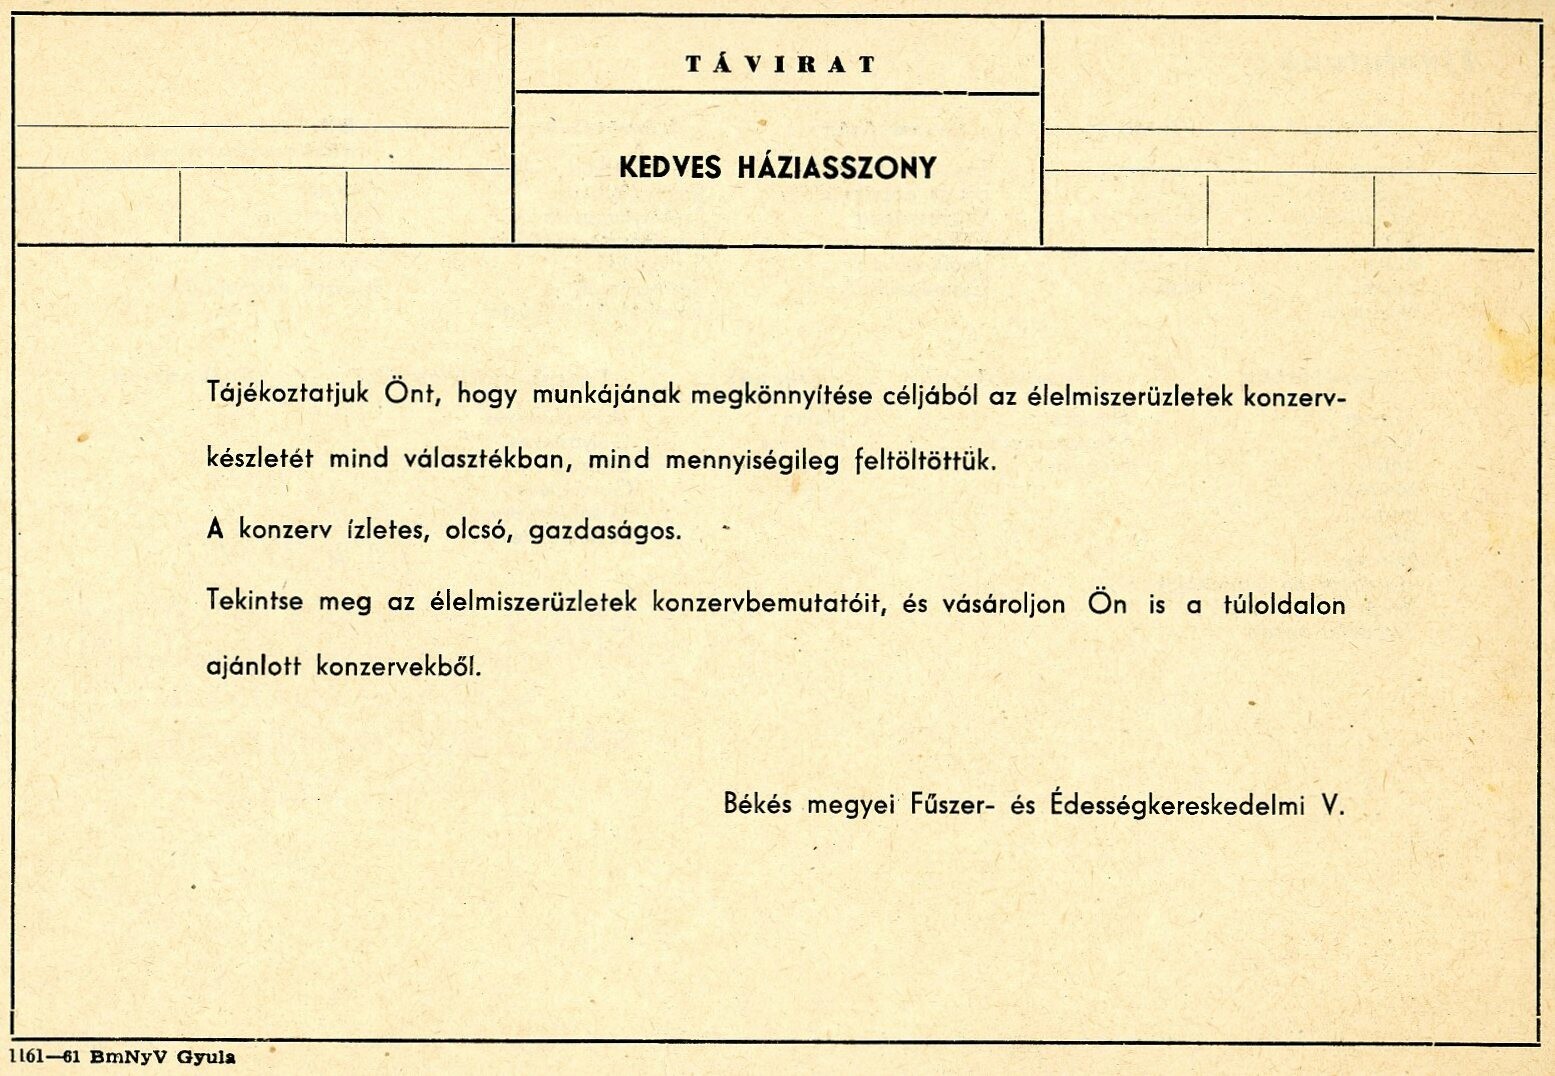 Távirat (Erkel Ferenc Múzeum CC BY-NC-SA)